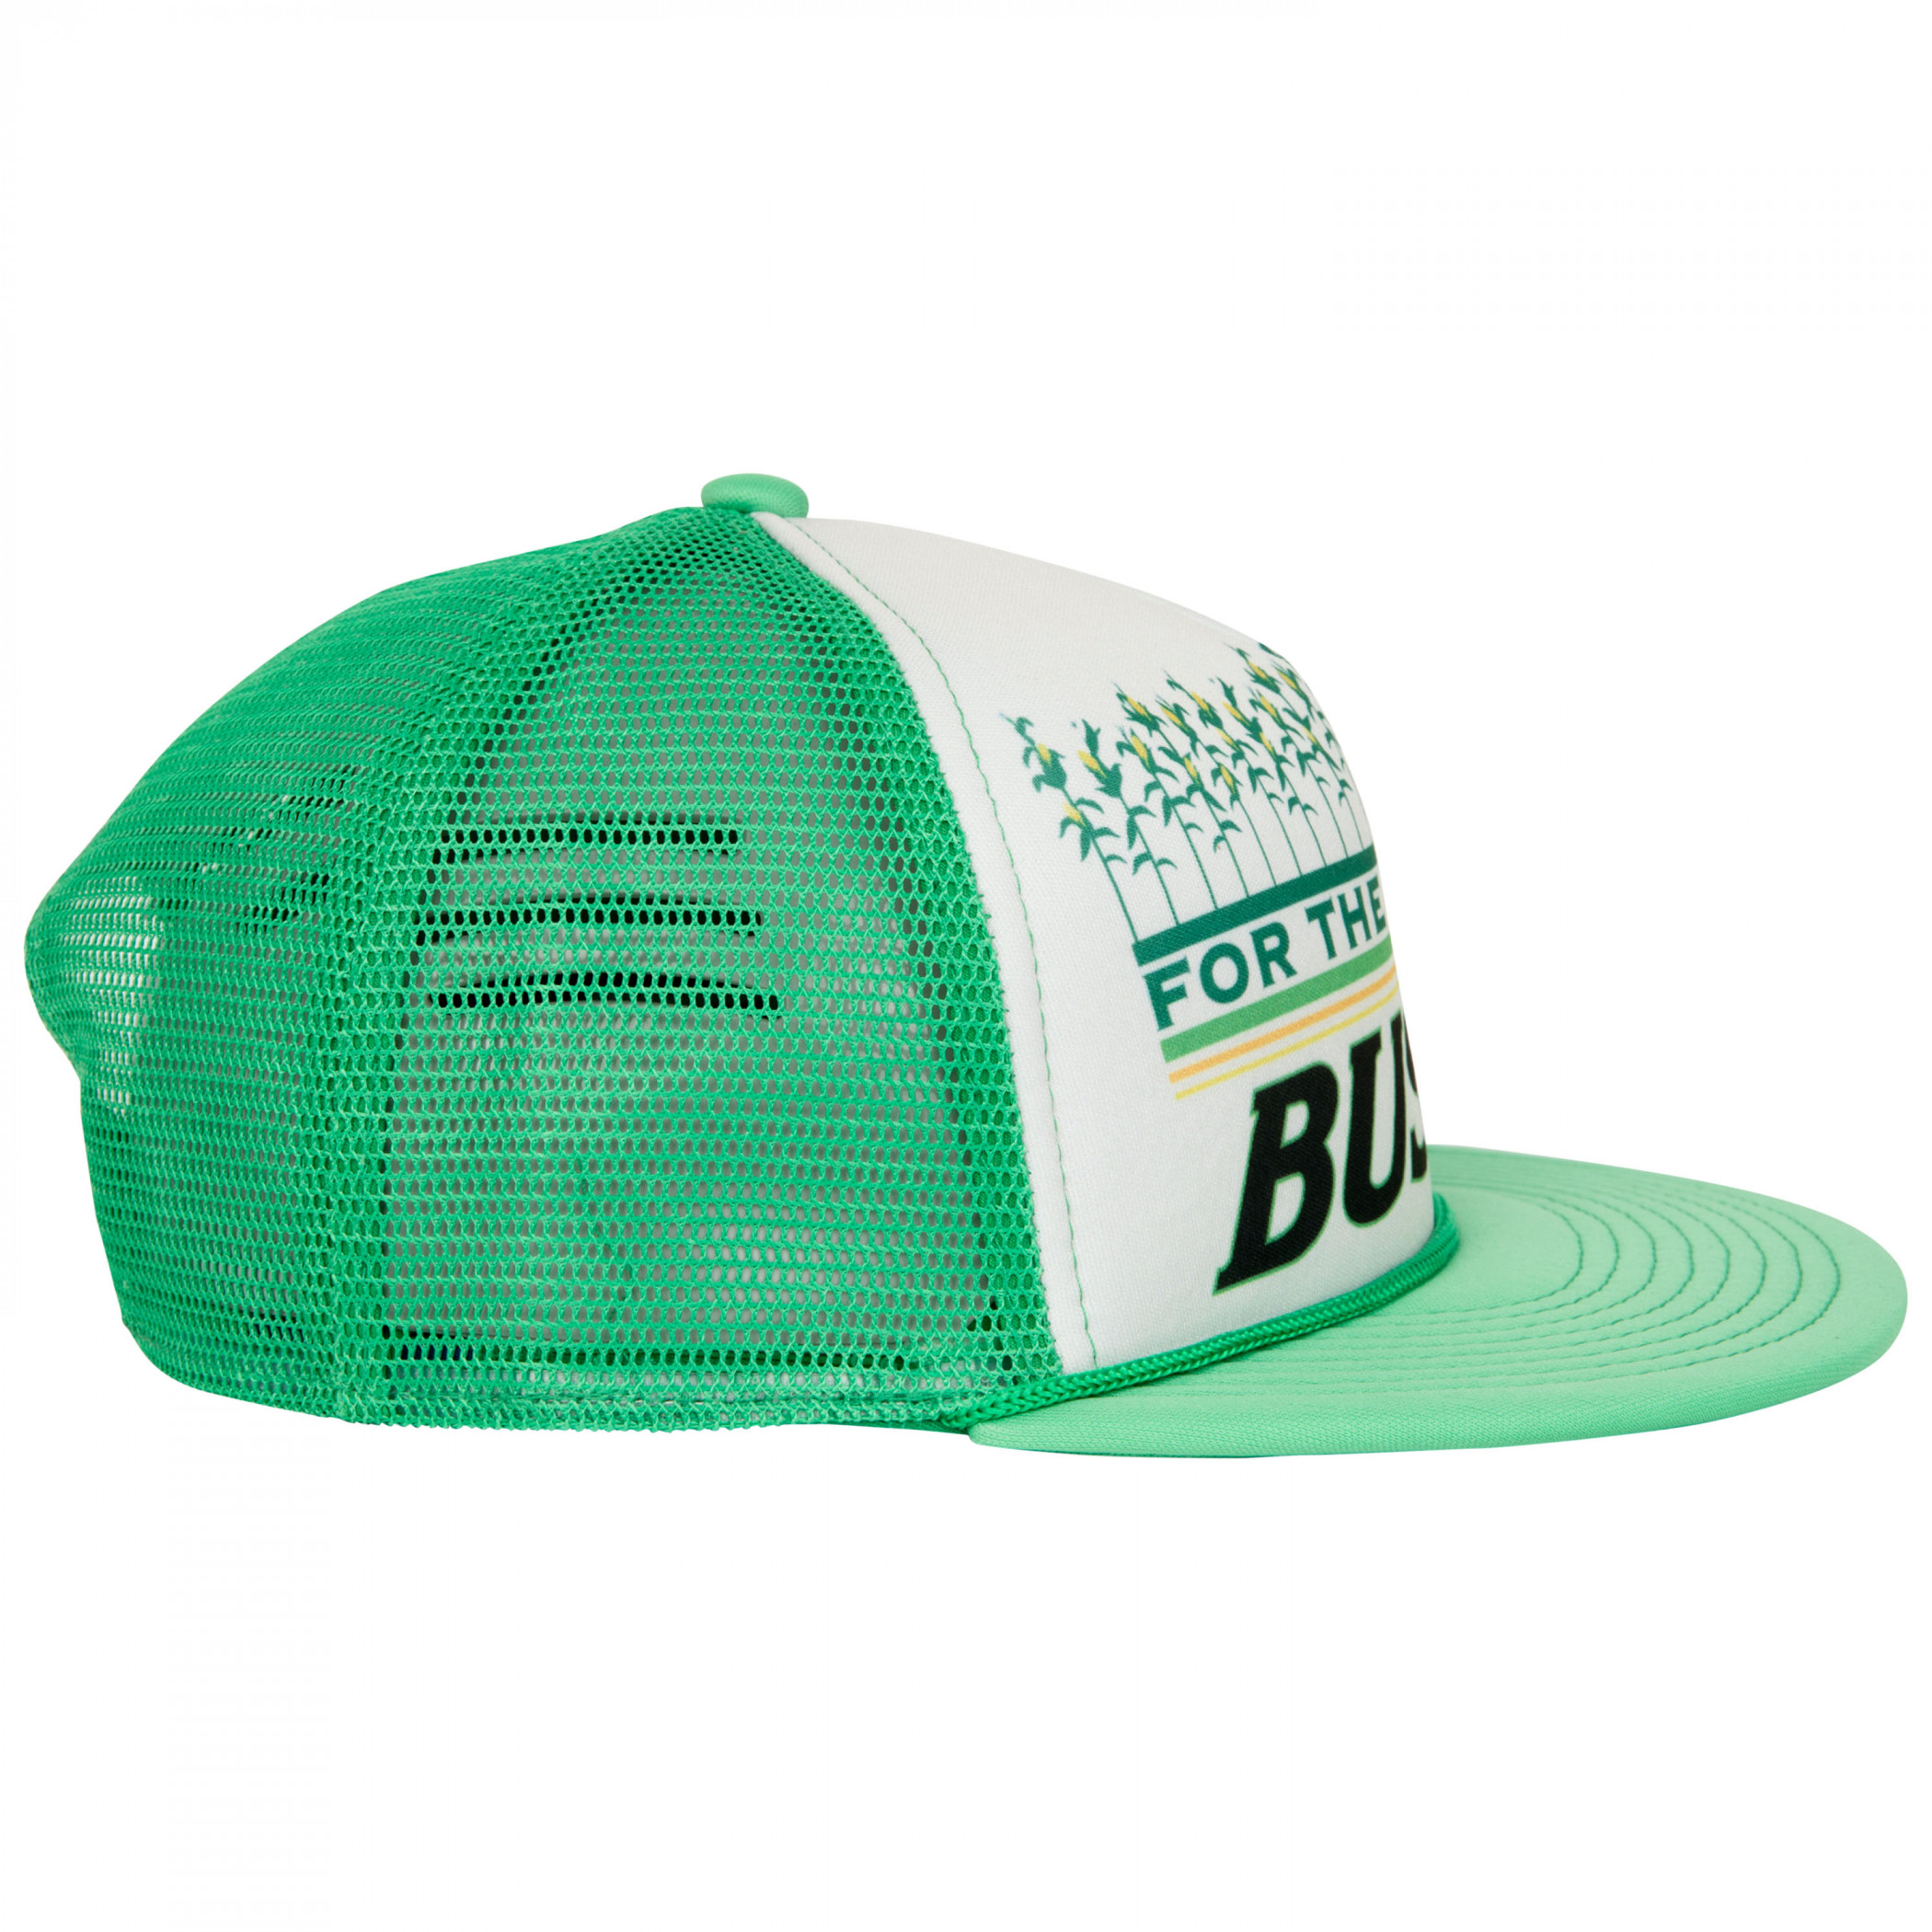 Busch For The Farmers Trucker Hat